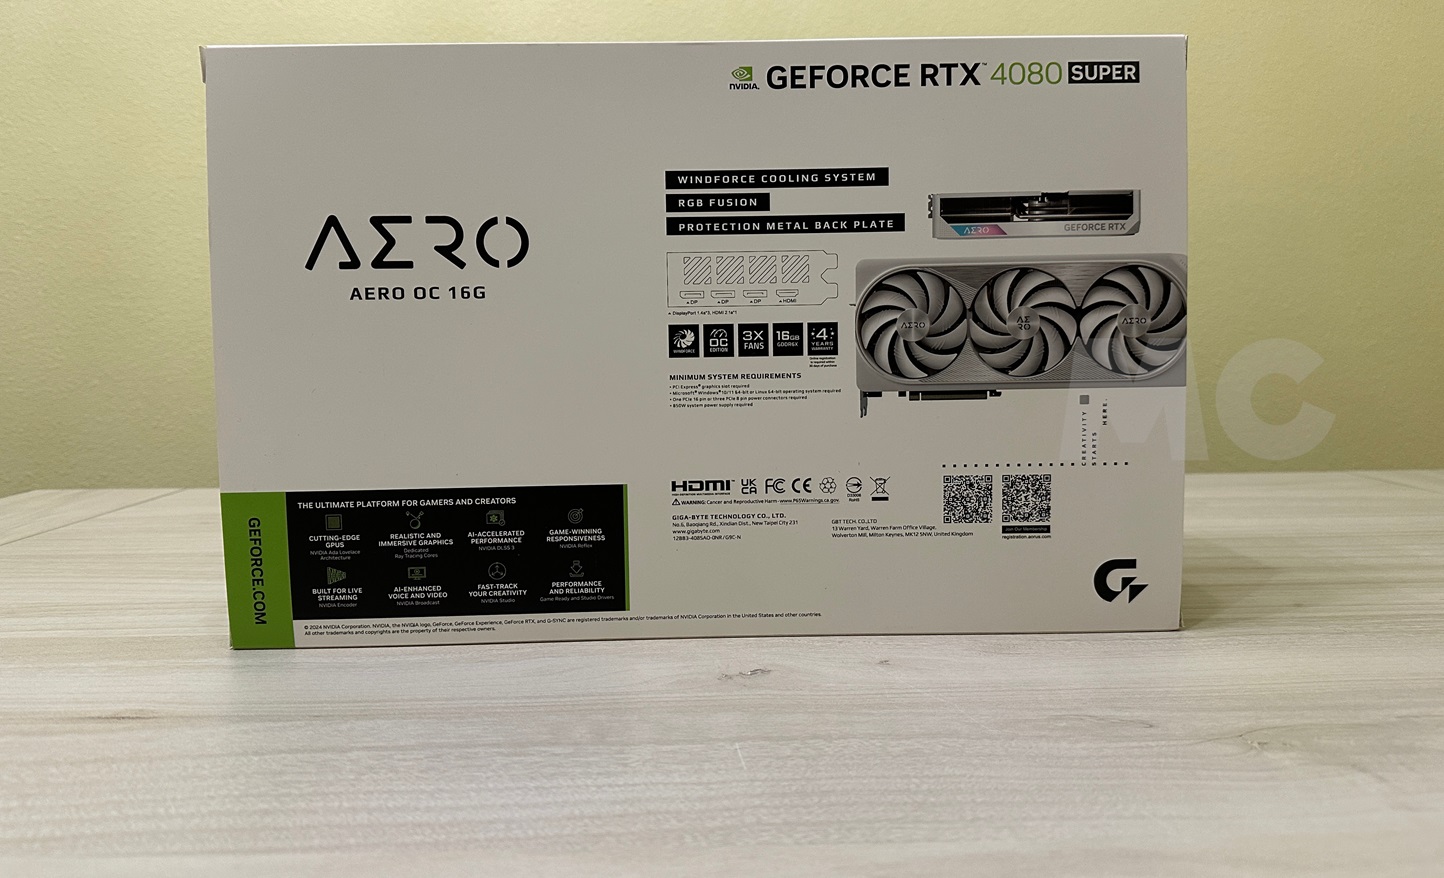 GIGABYTE GeForce RTX 4080 SUPER AERO